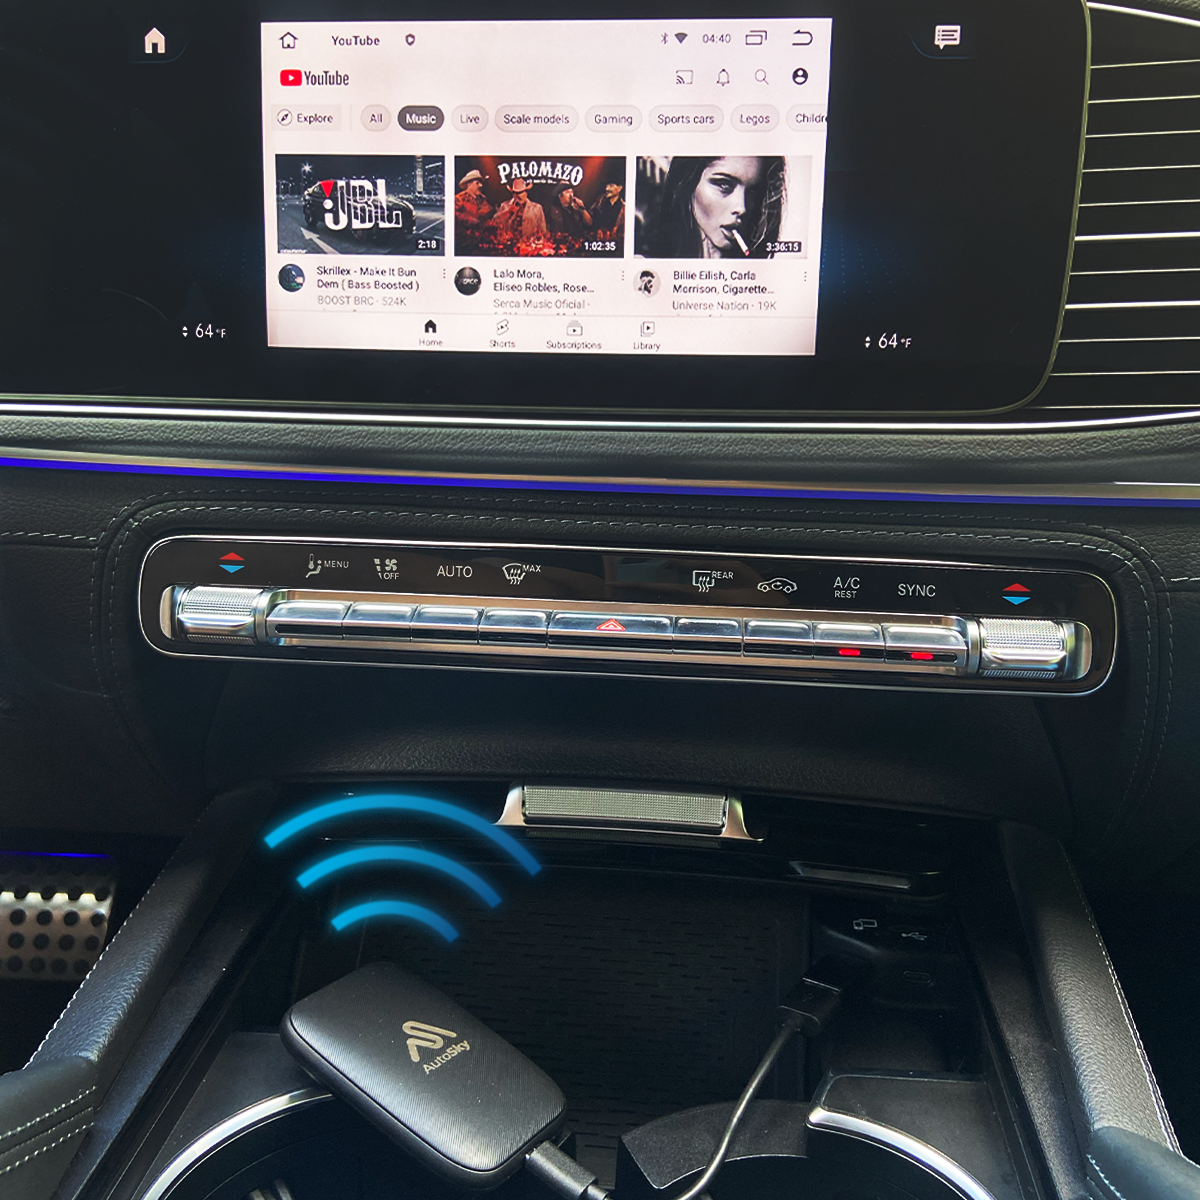 AutoSky Wireless CarPlay and Android Auto AI Box Lite - Supports Netfl -  AutoSky